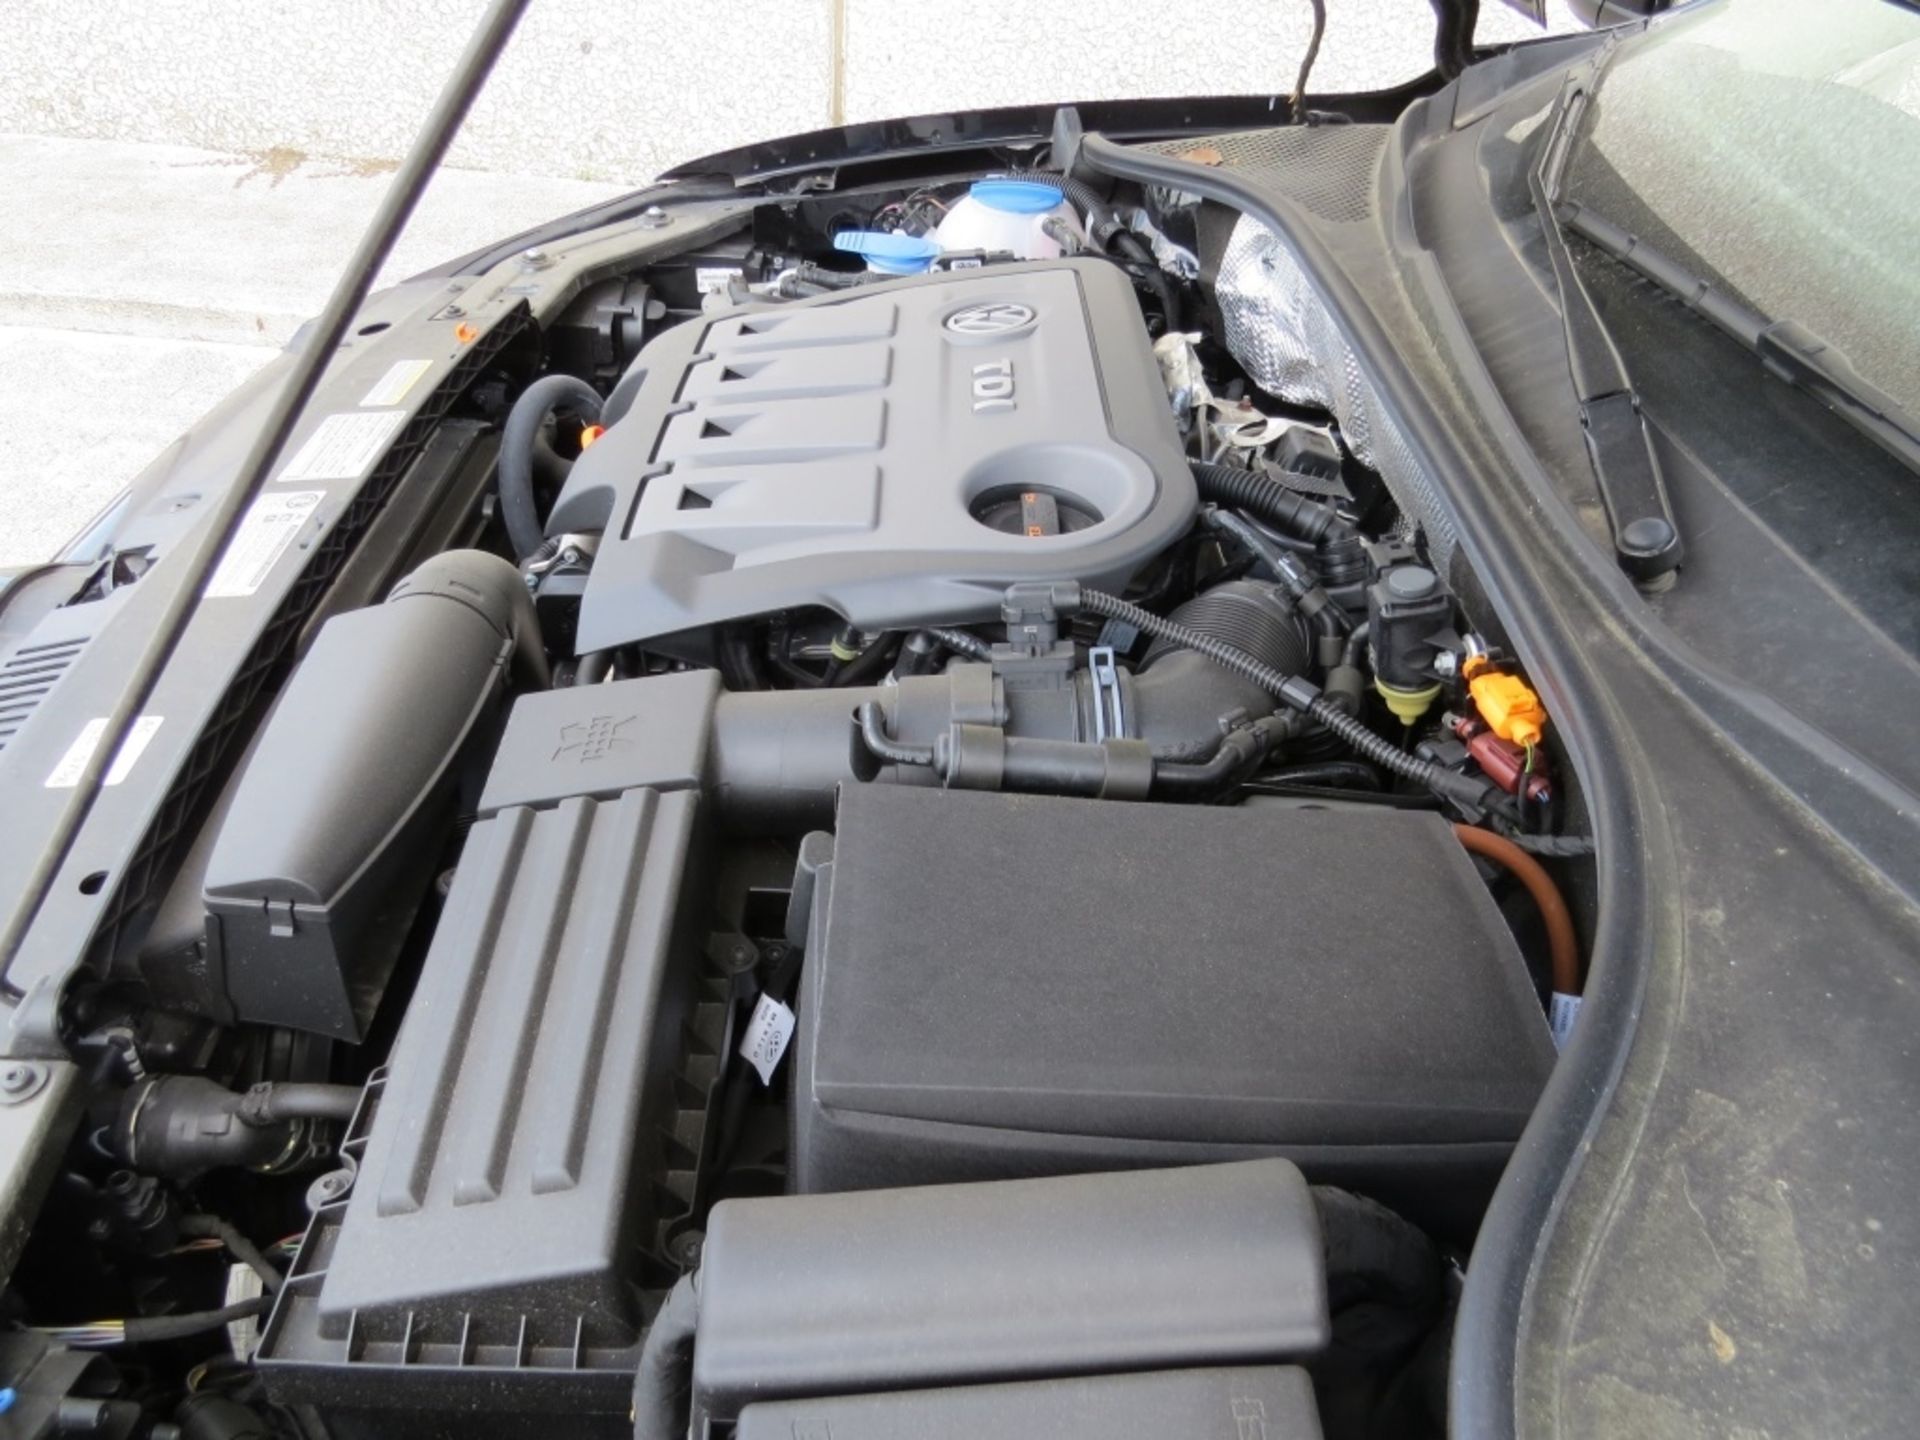 2012 VW Passat TDI Diesel - VIN-1VWBN7A3XCC096912 - Image 20 of 36